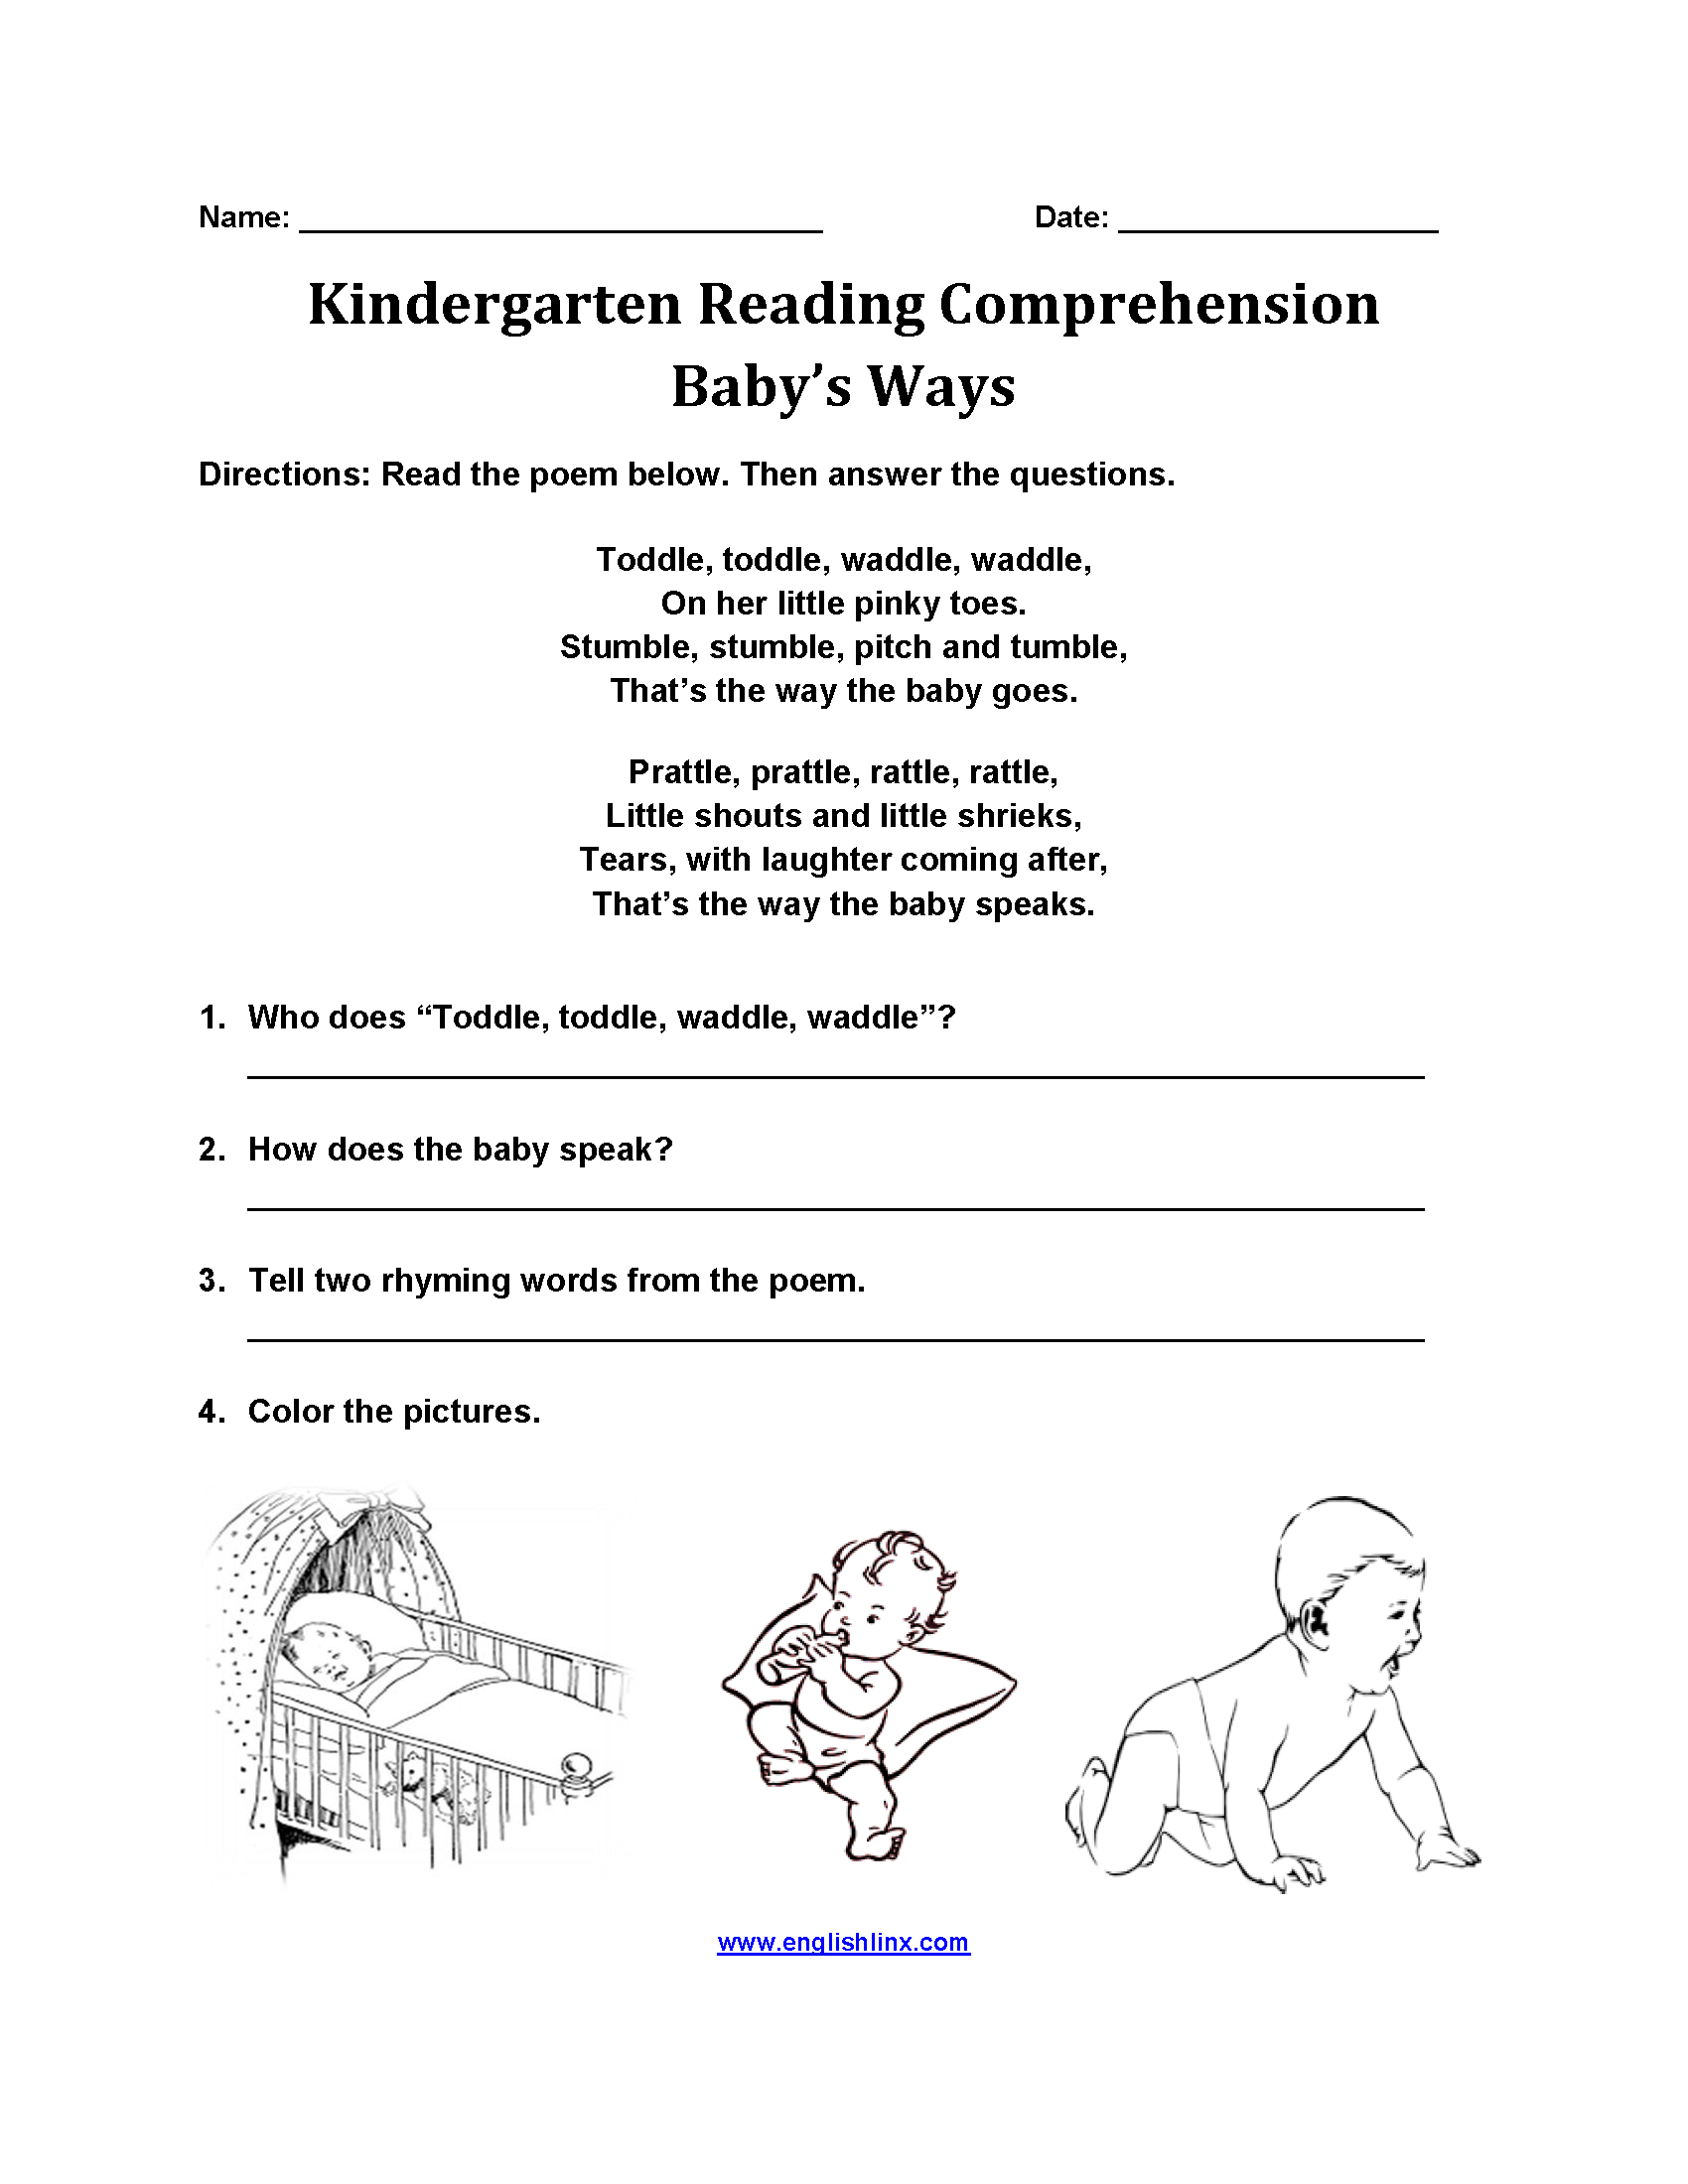 Baby's Ways Kindergarten Reading Comprehension Worksheets